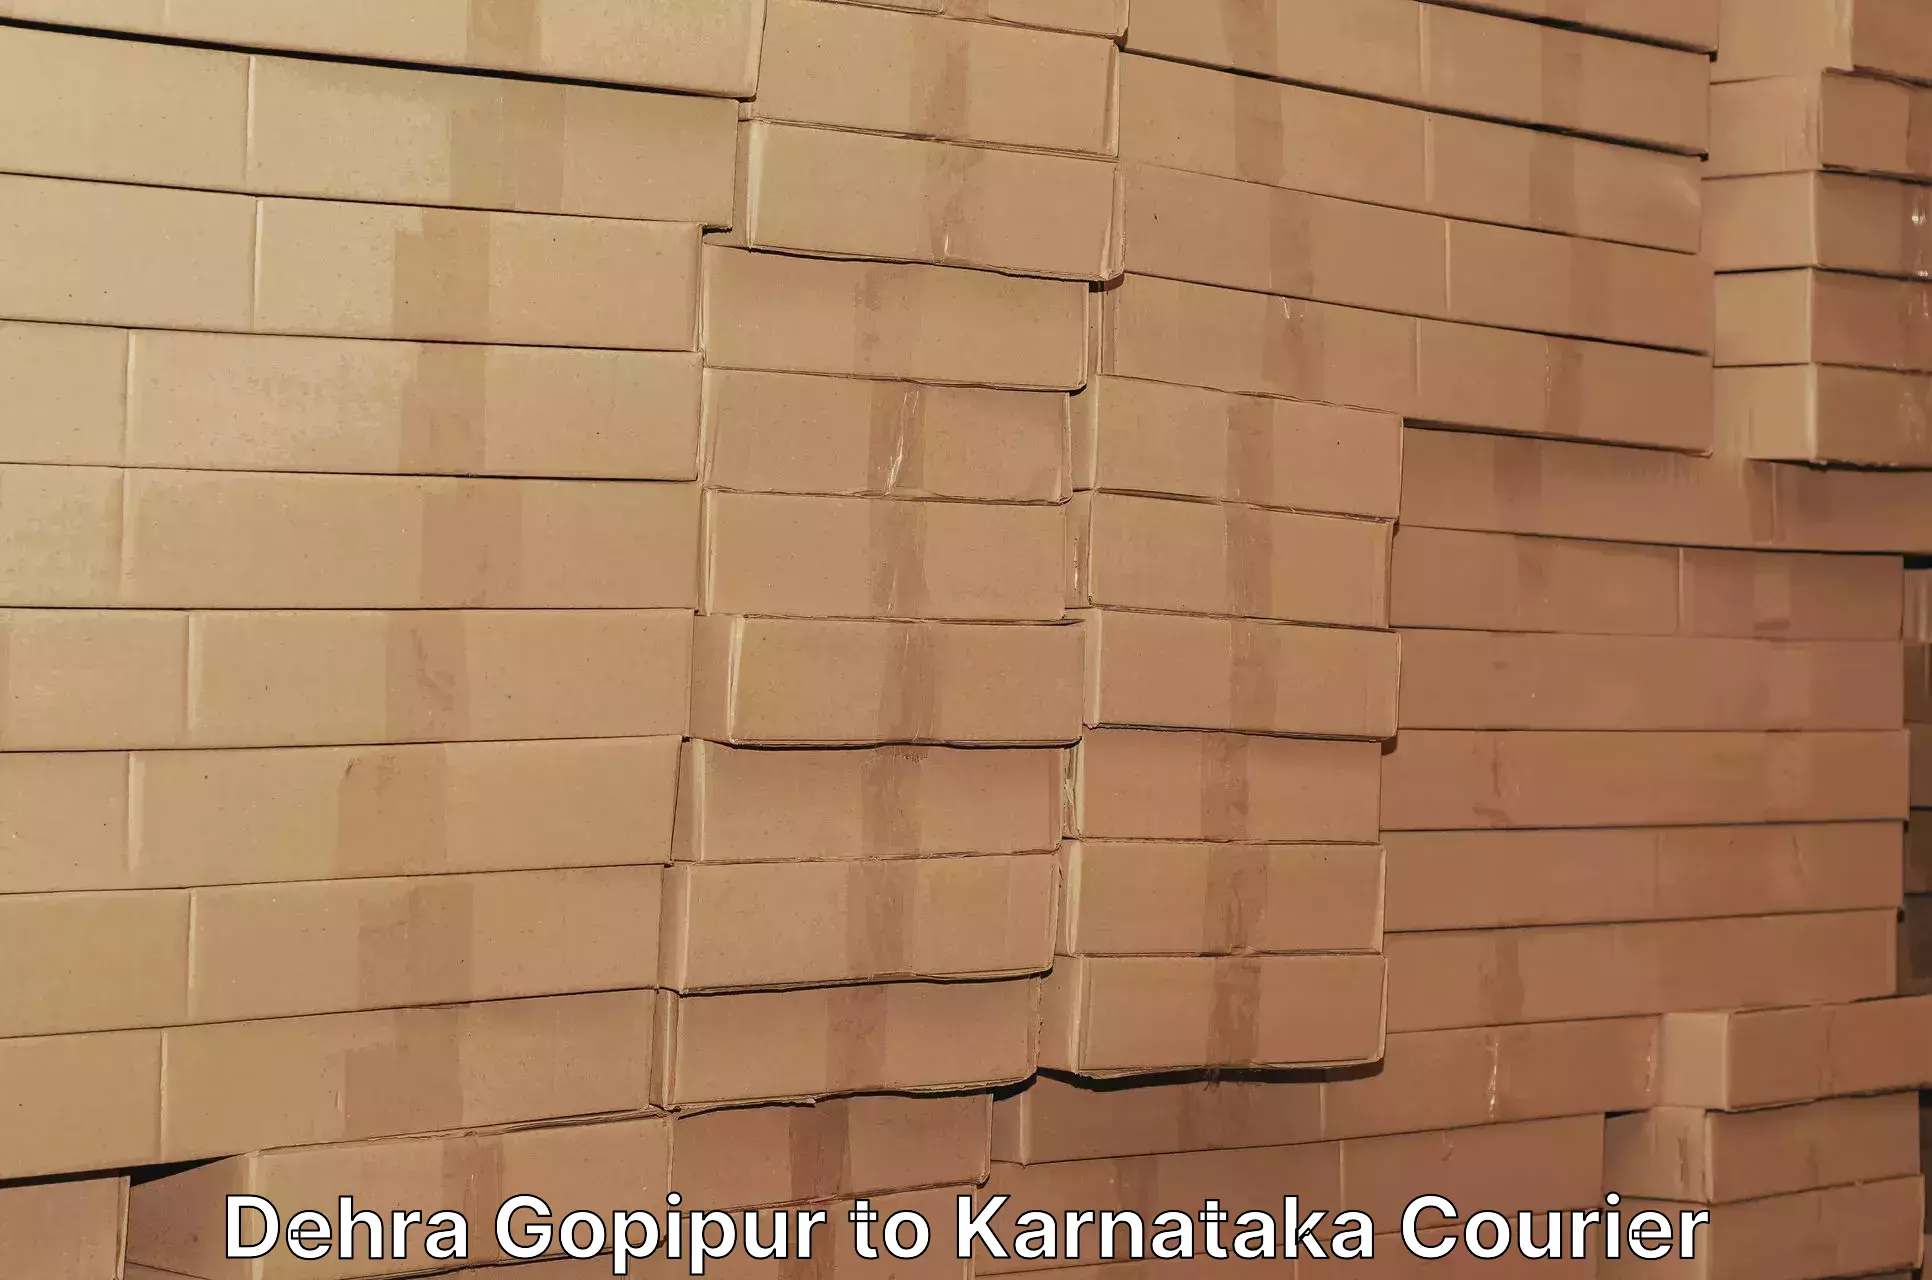 Courier service innovation Dehra Gopipur to Hanur